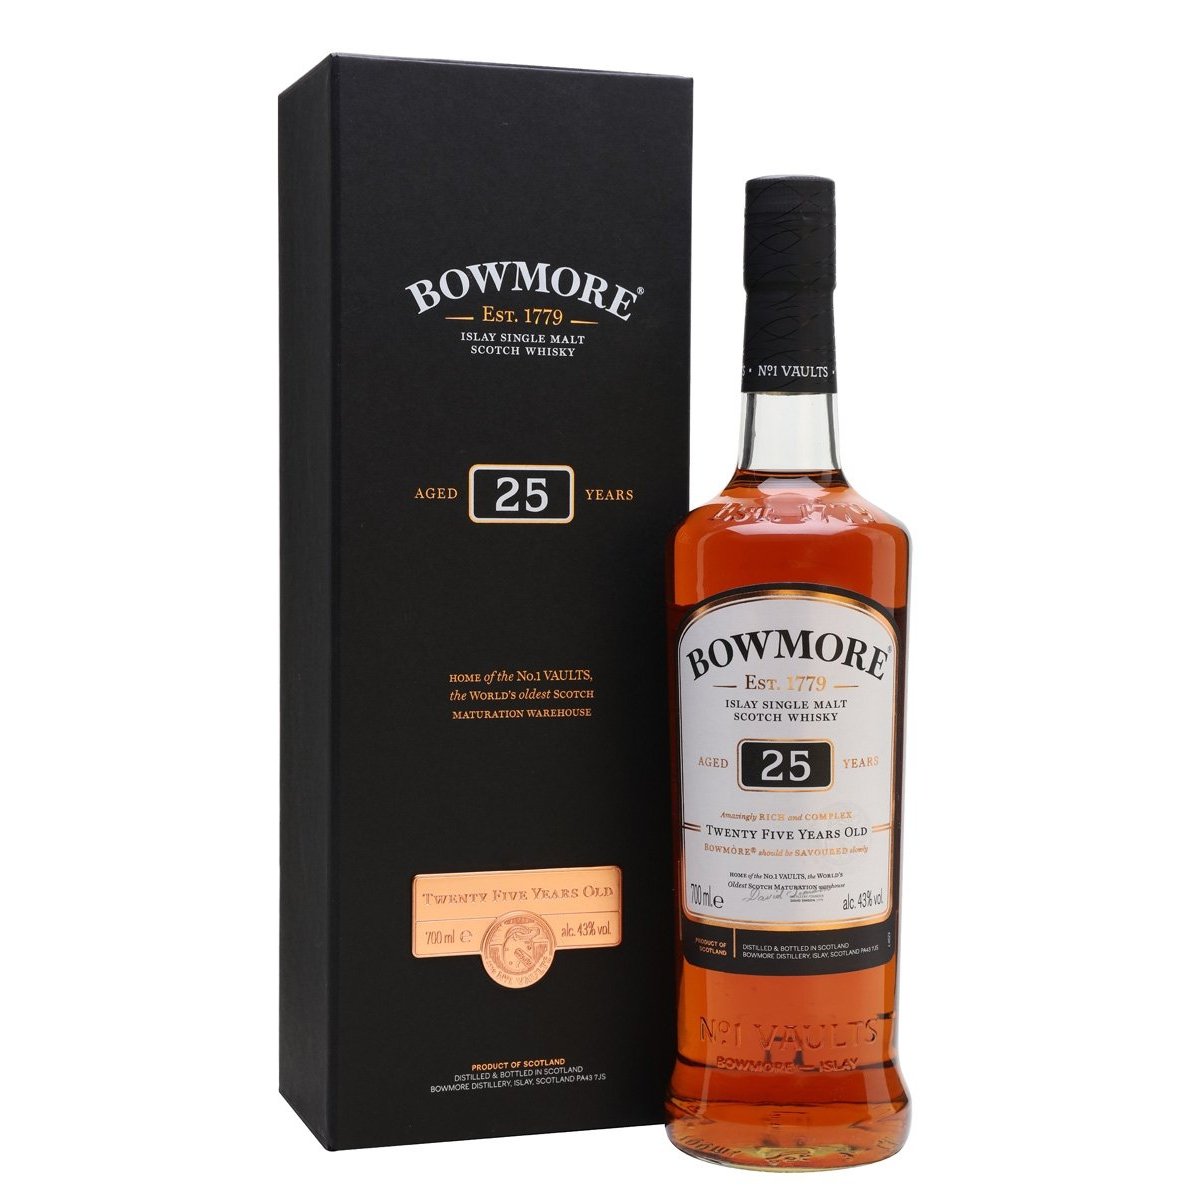 Bowmore 25 Years Old Islay Single Malt Scotch Whisky 43% Vol. 0,7l in Giftbox